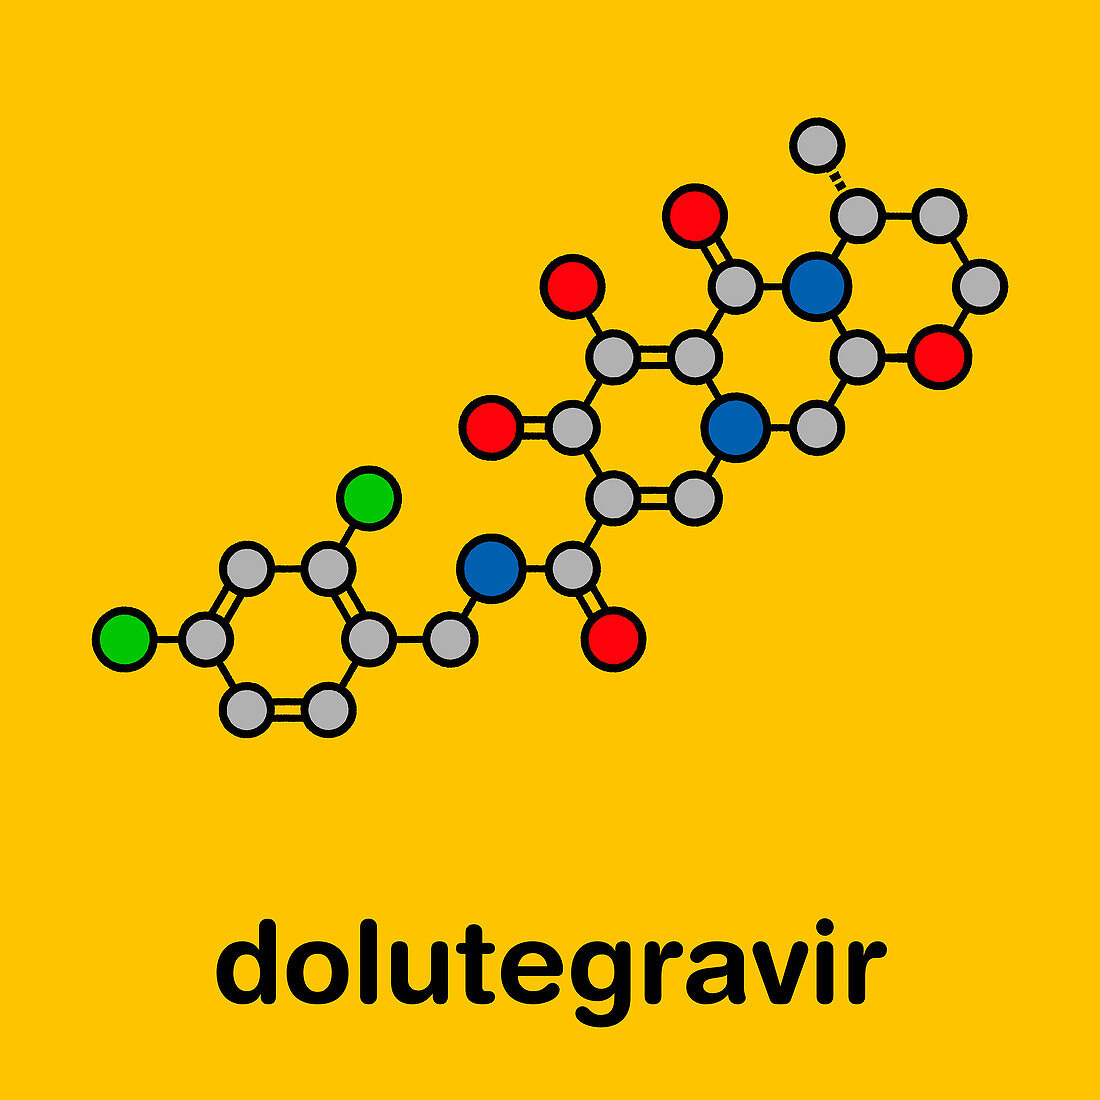 Dolutegravir HIV drug, molecular model